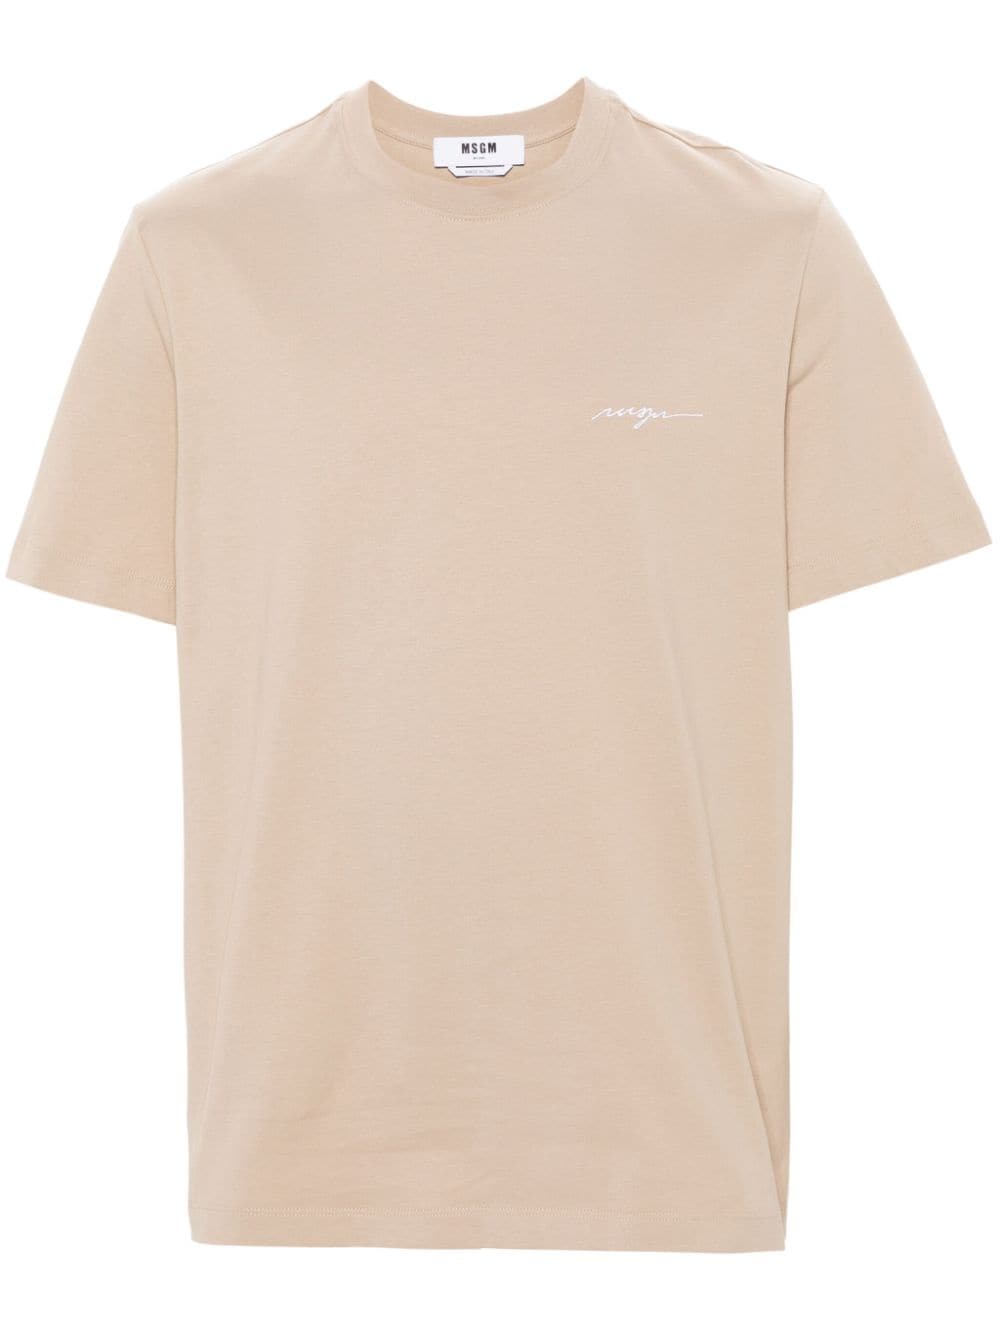 T-shirt beige logo corsivo